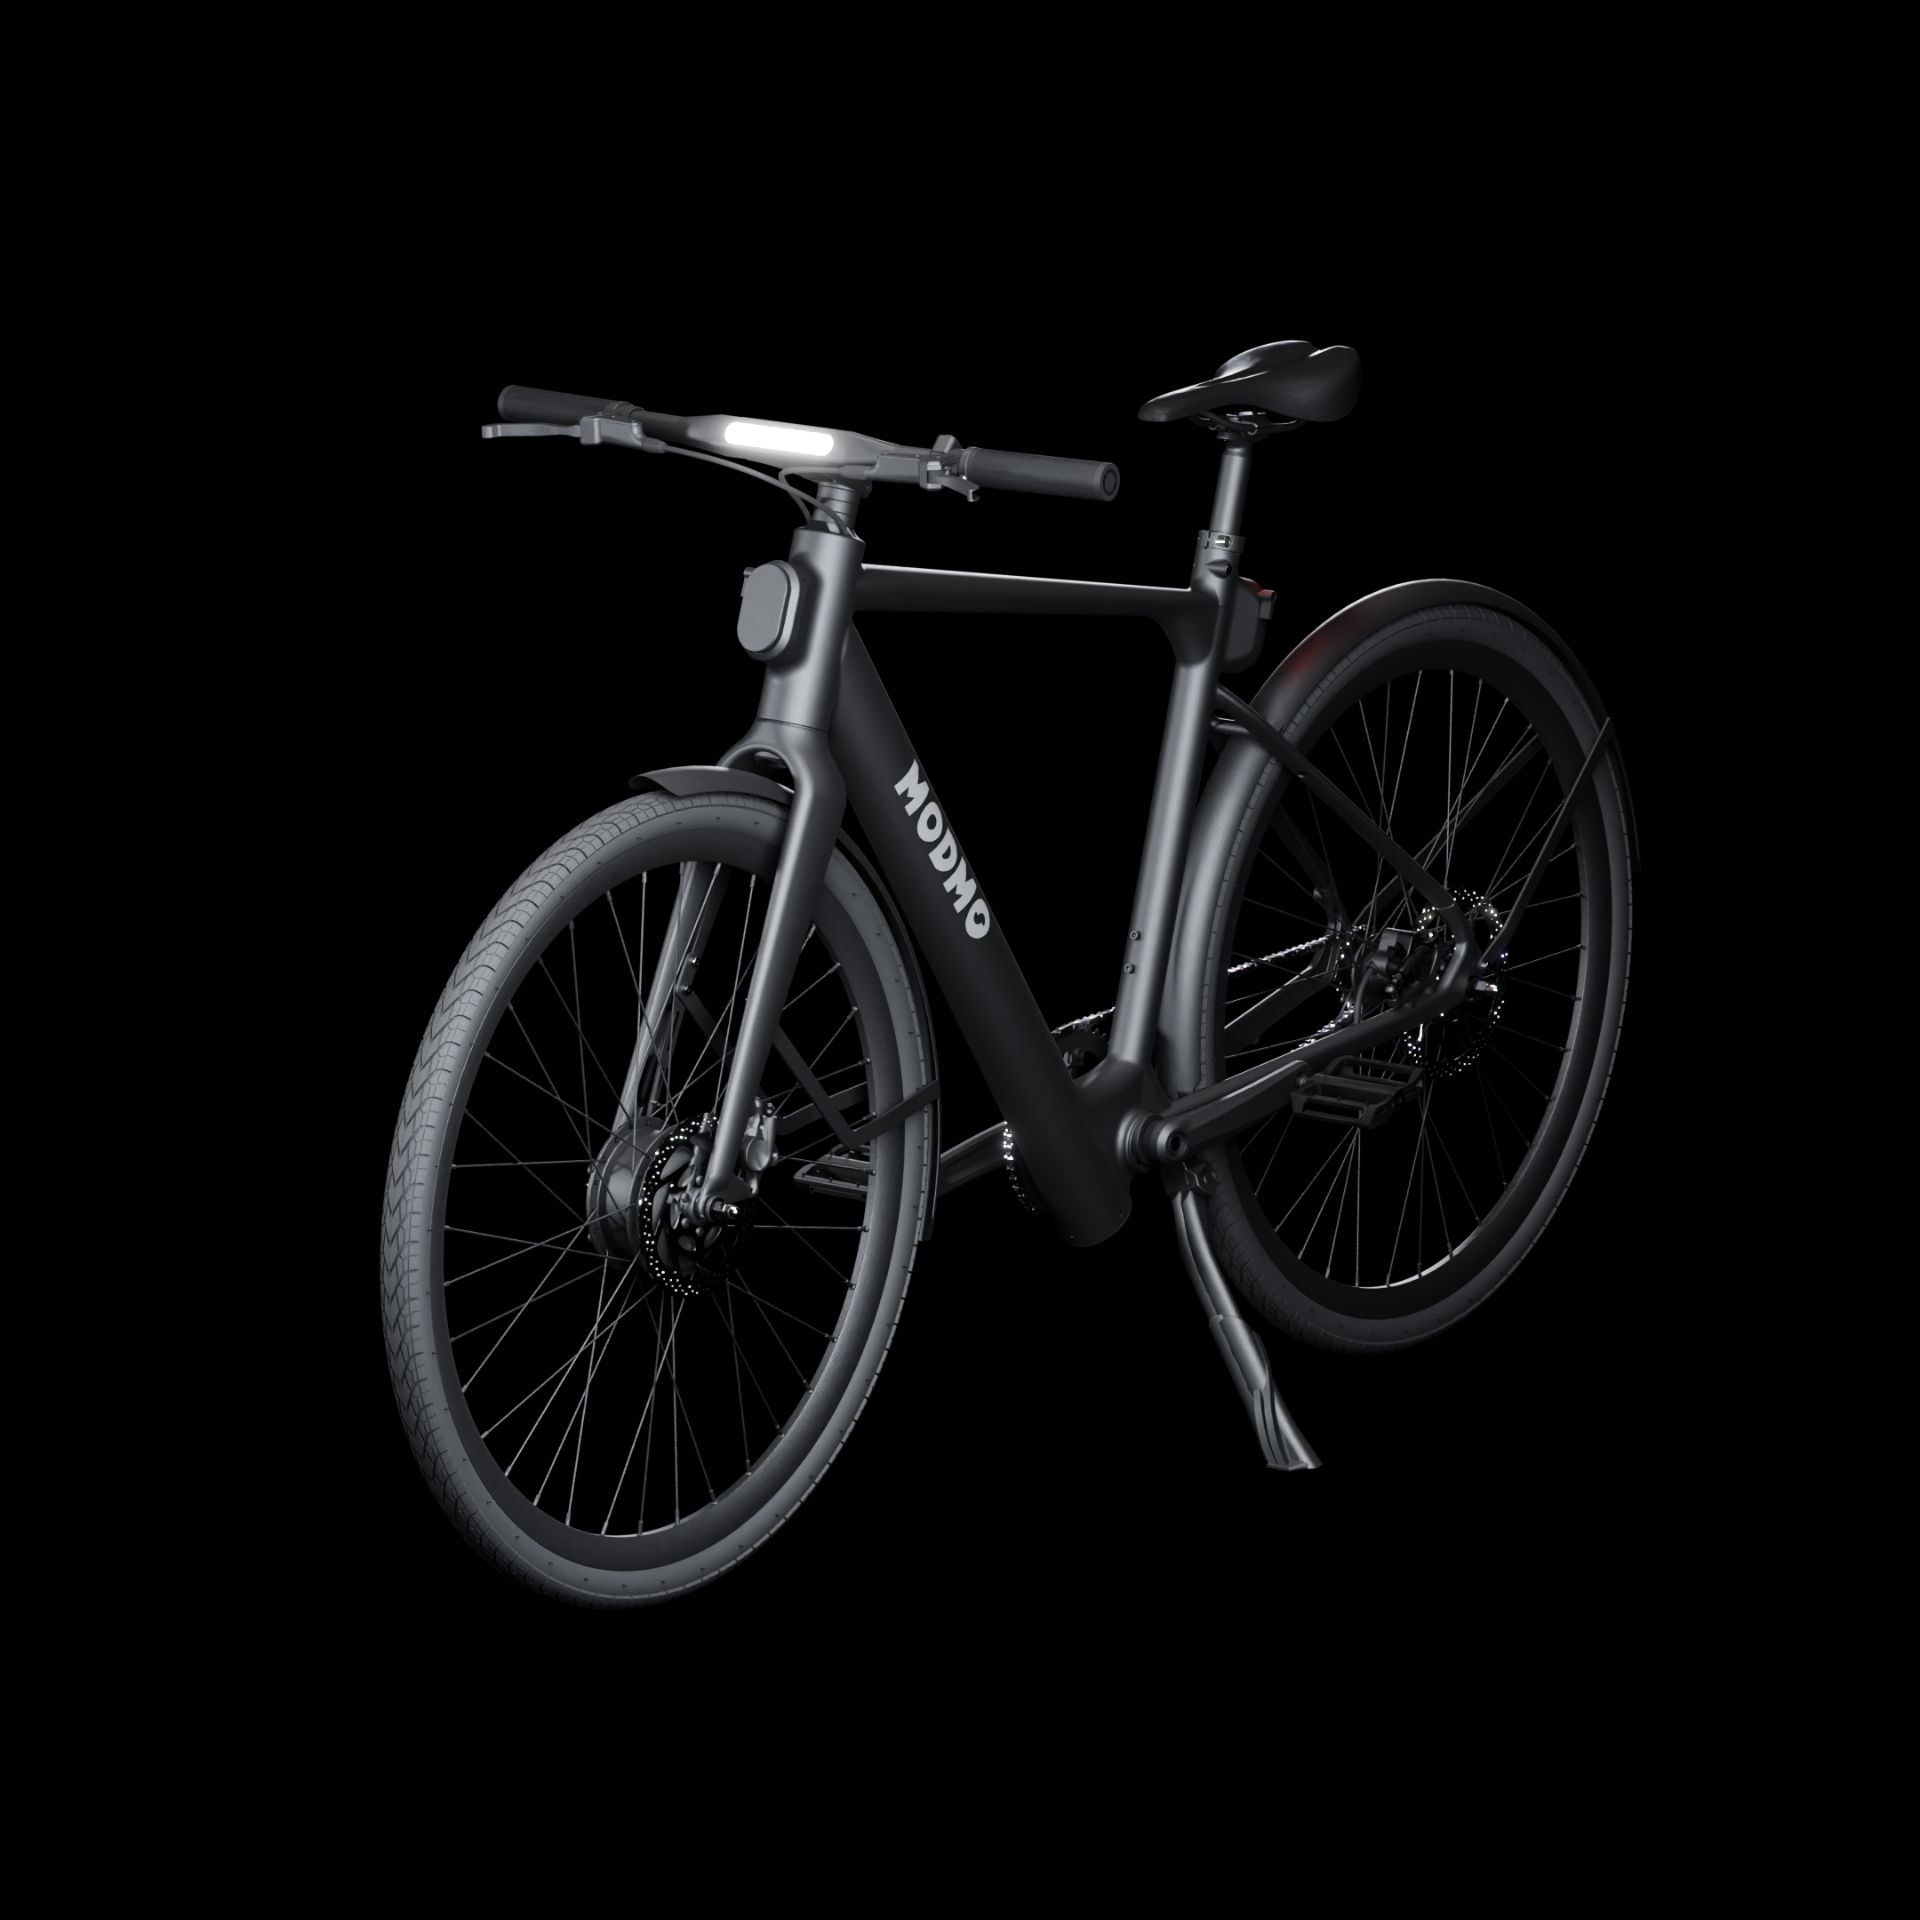 Modmo Saigon+ Electric Bicycle - RRP £2800 - Size L (Rider 175-190cm) - Image 3 of 21